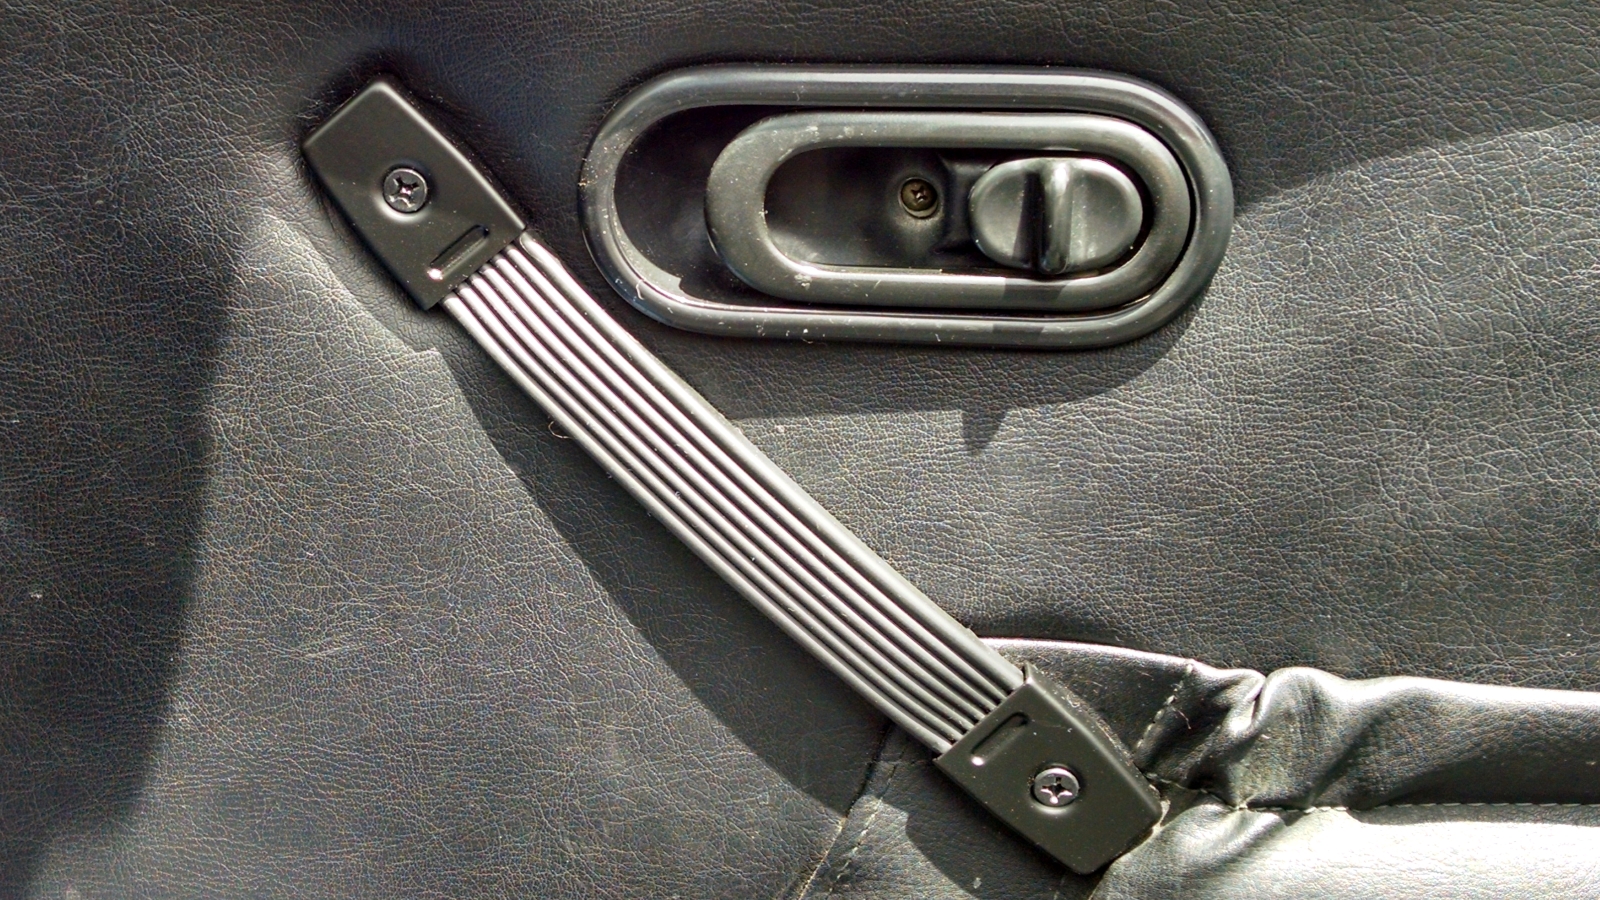 Miata door handle replaced with Parts-Express Penn-Elcom strap handle